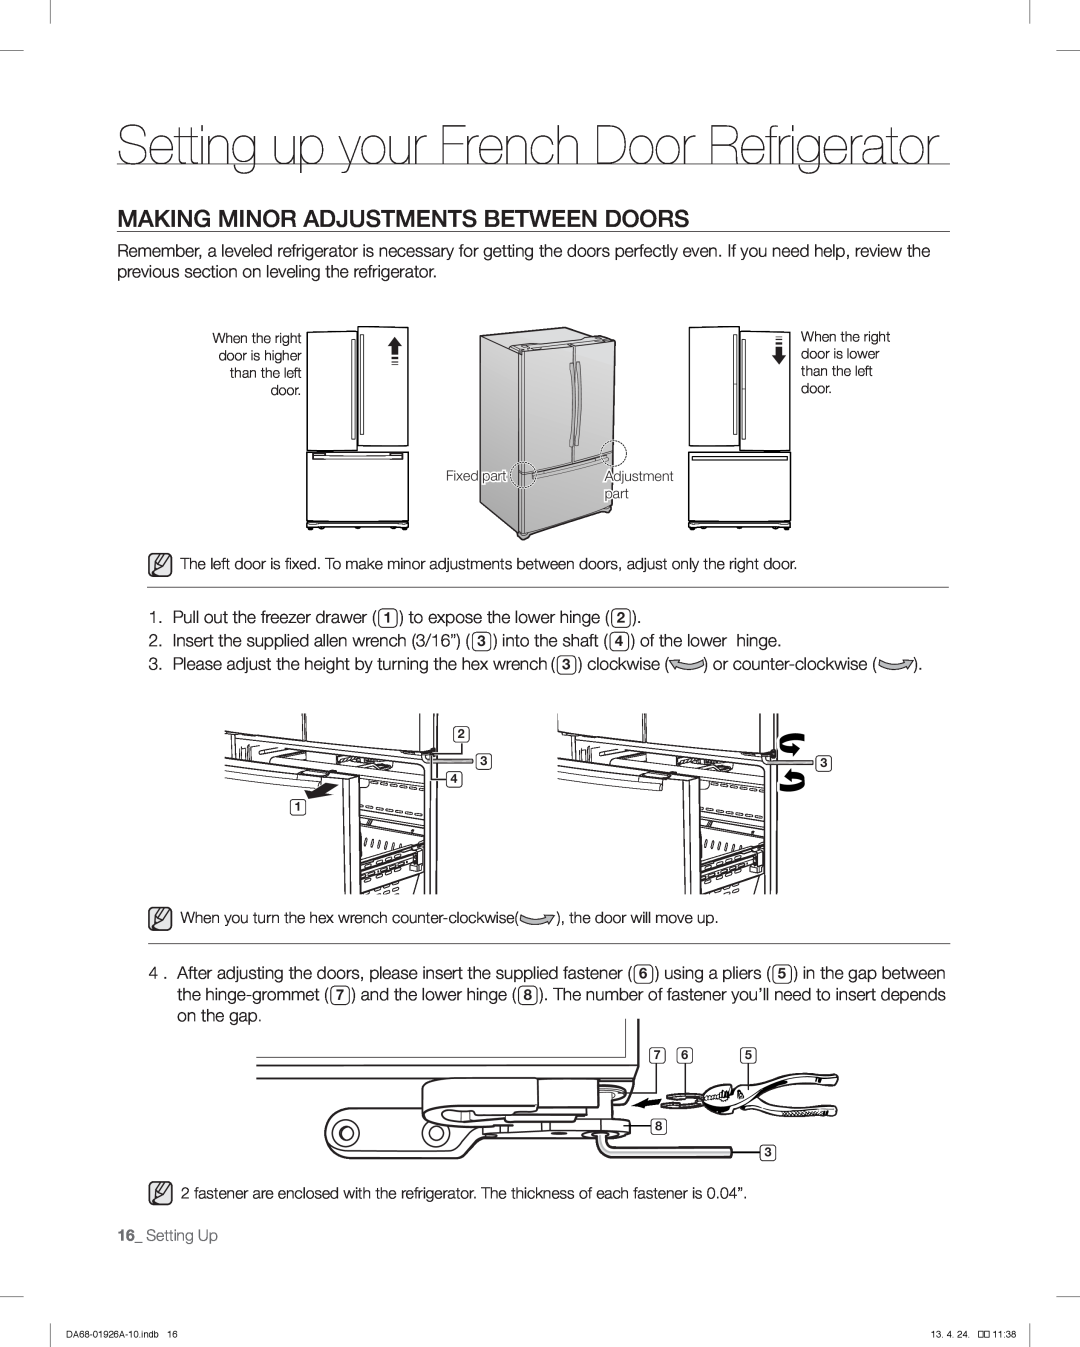 Samsung RFG293HARS user manual Making Minor Adjustments Between Doors, Setting up your French Door Refrigerator, on the gap 